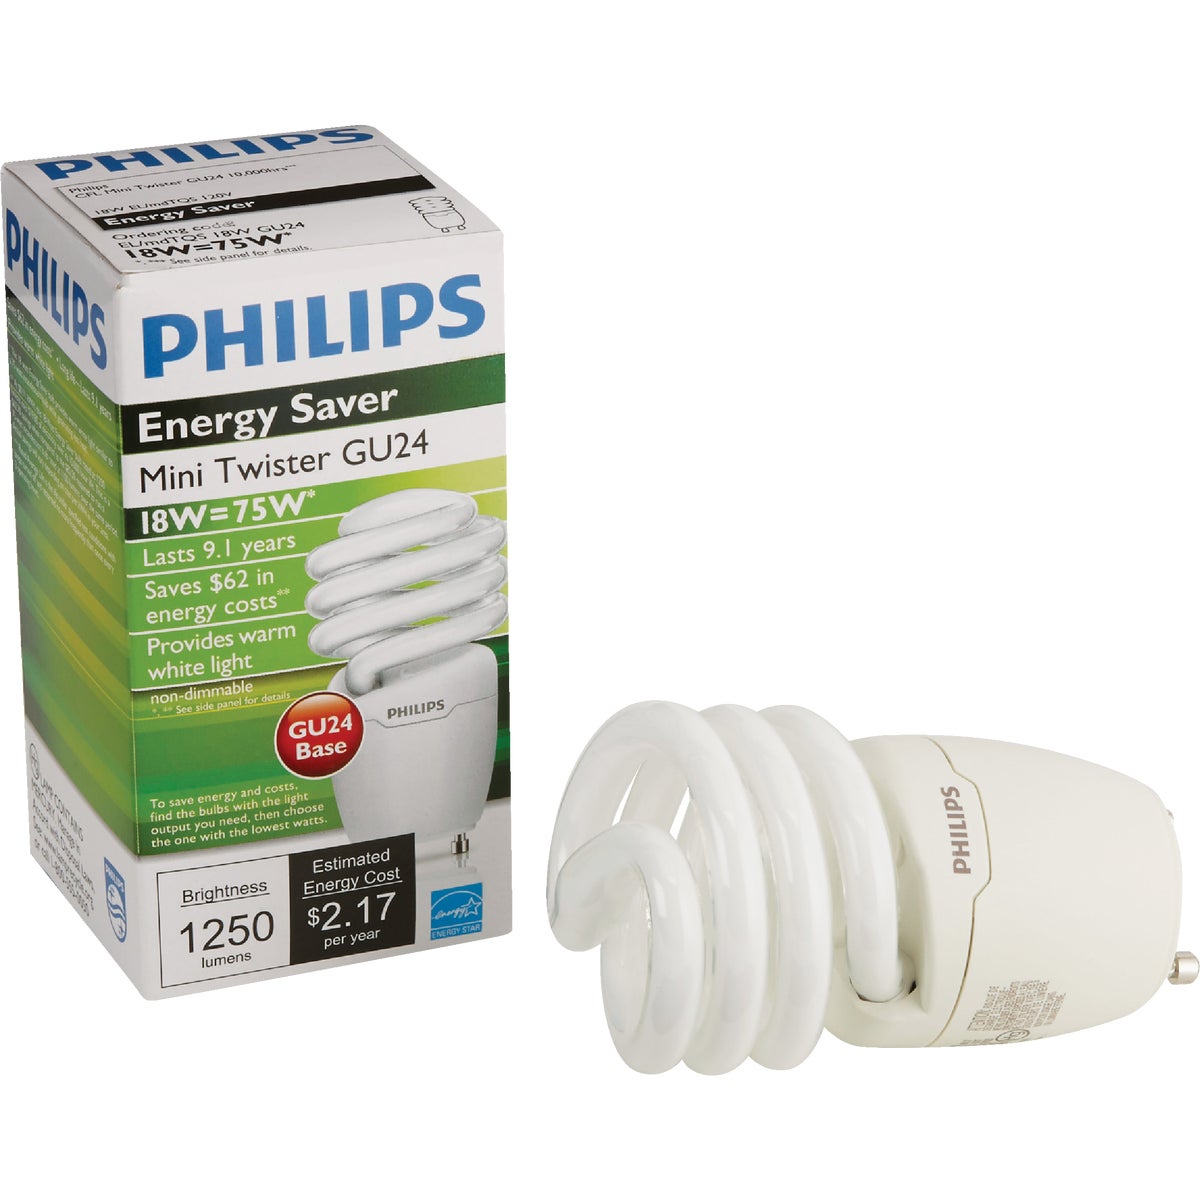 Philips Energy Saver 75W Equivalent Soft White GU24 Base T2 Spiral CFL Light Bulb